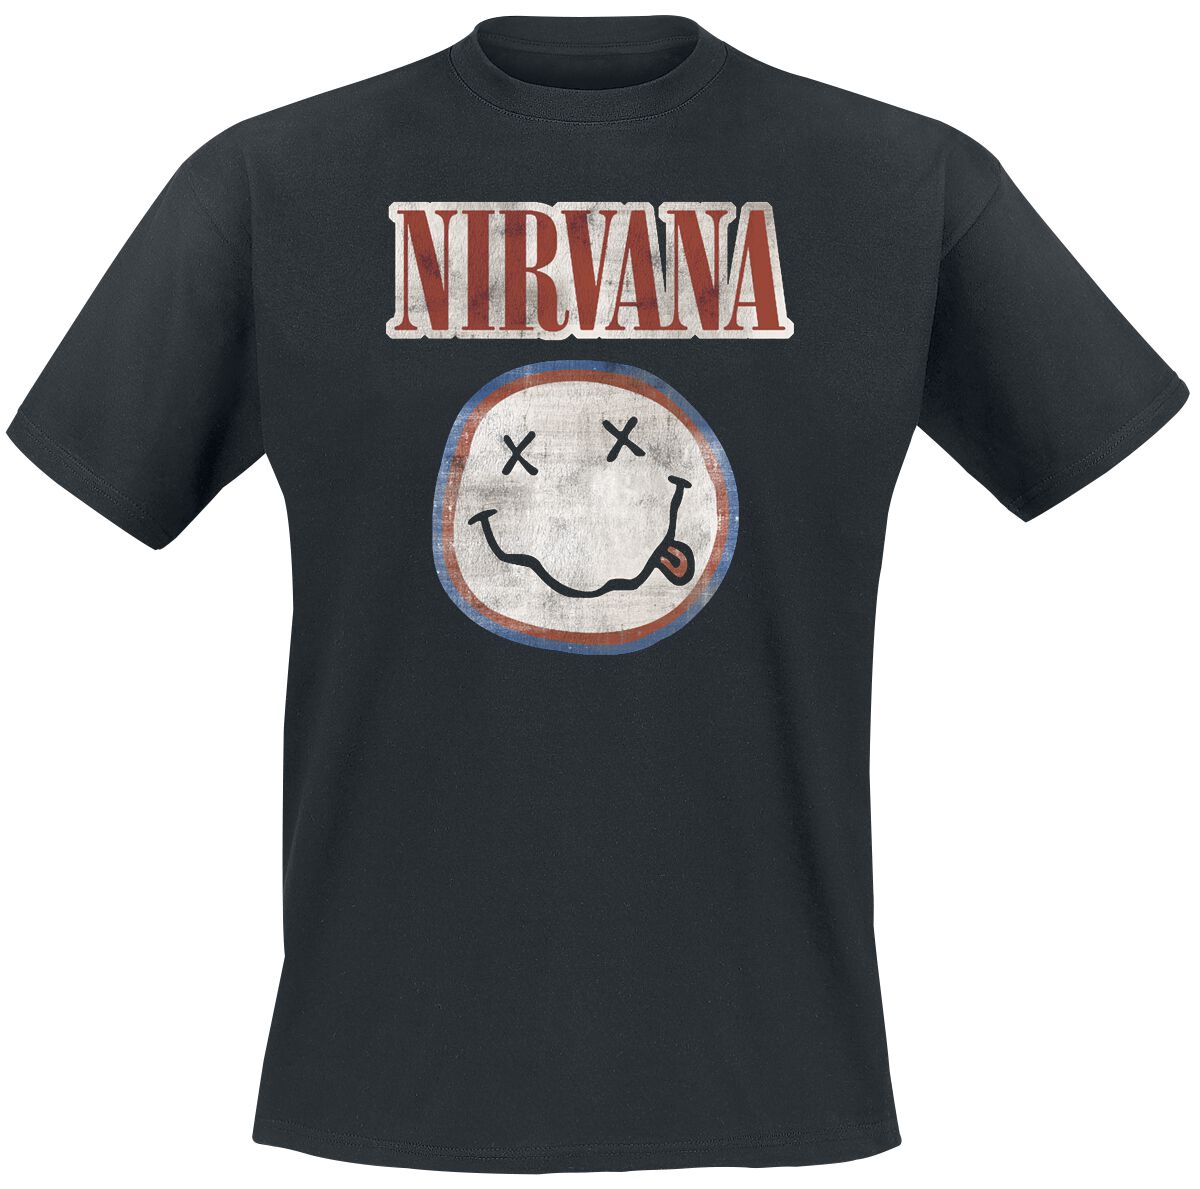 Nirvana Distressed Logo T-Shirt schwarz in M